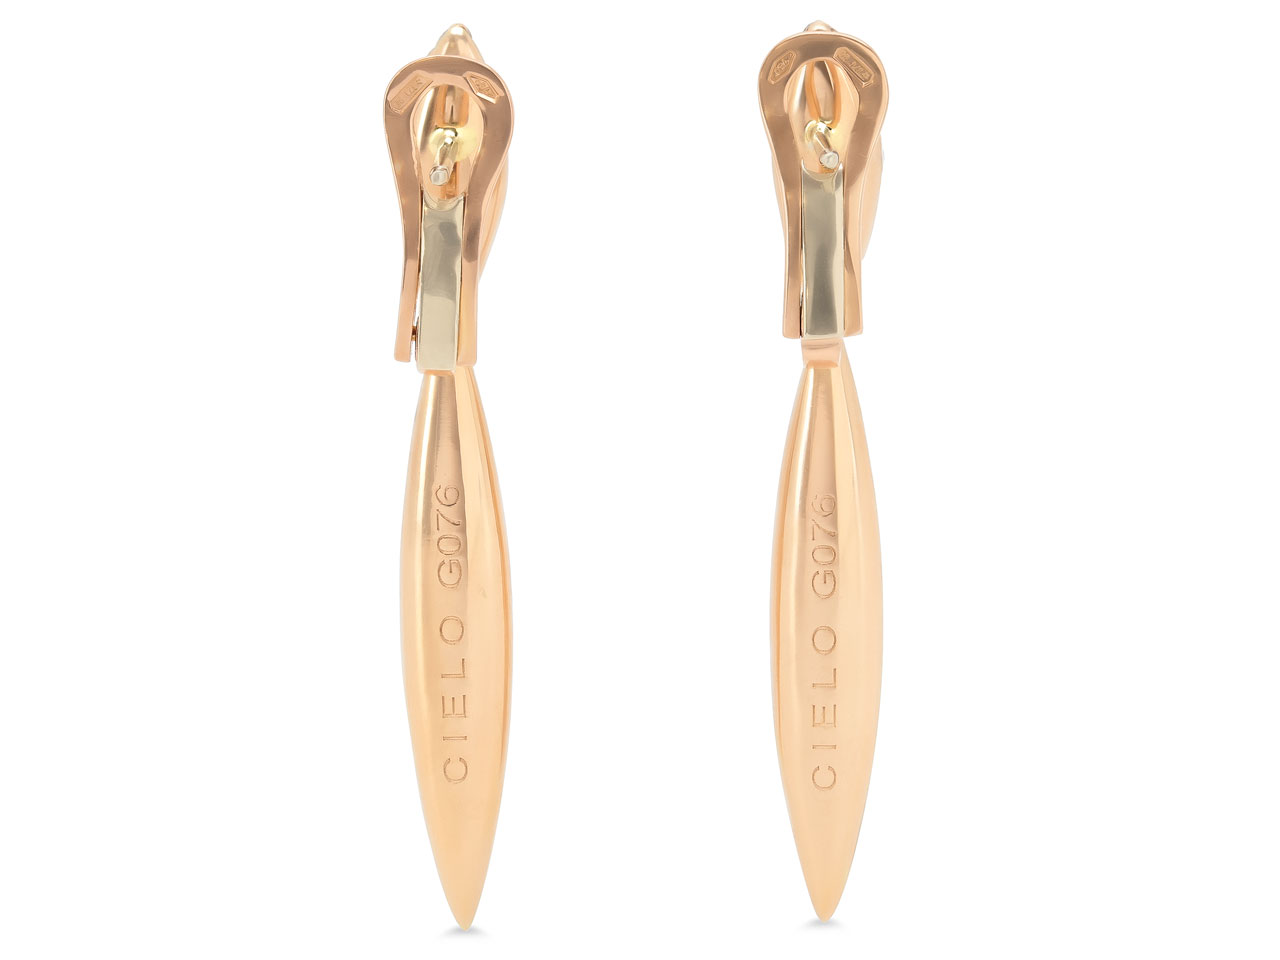 Mattia Cielo 'Ghiaccio' Diamond Earrings in 18K Rose Gold